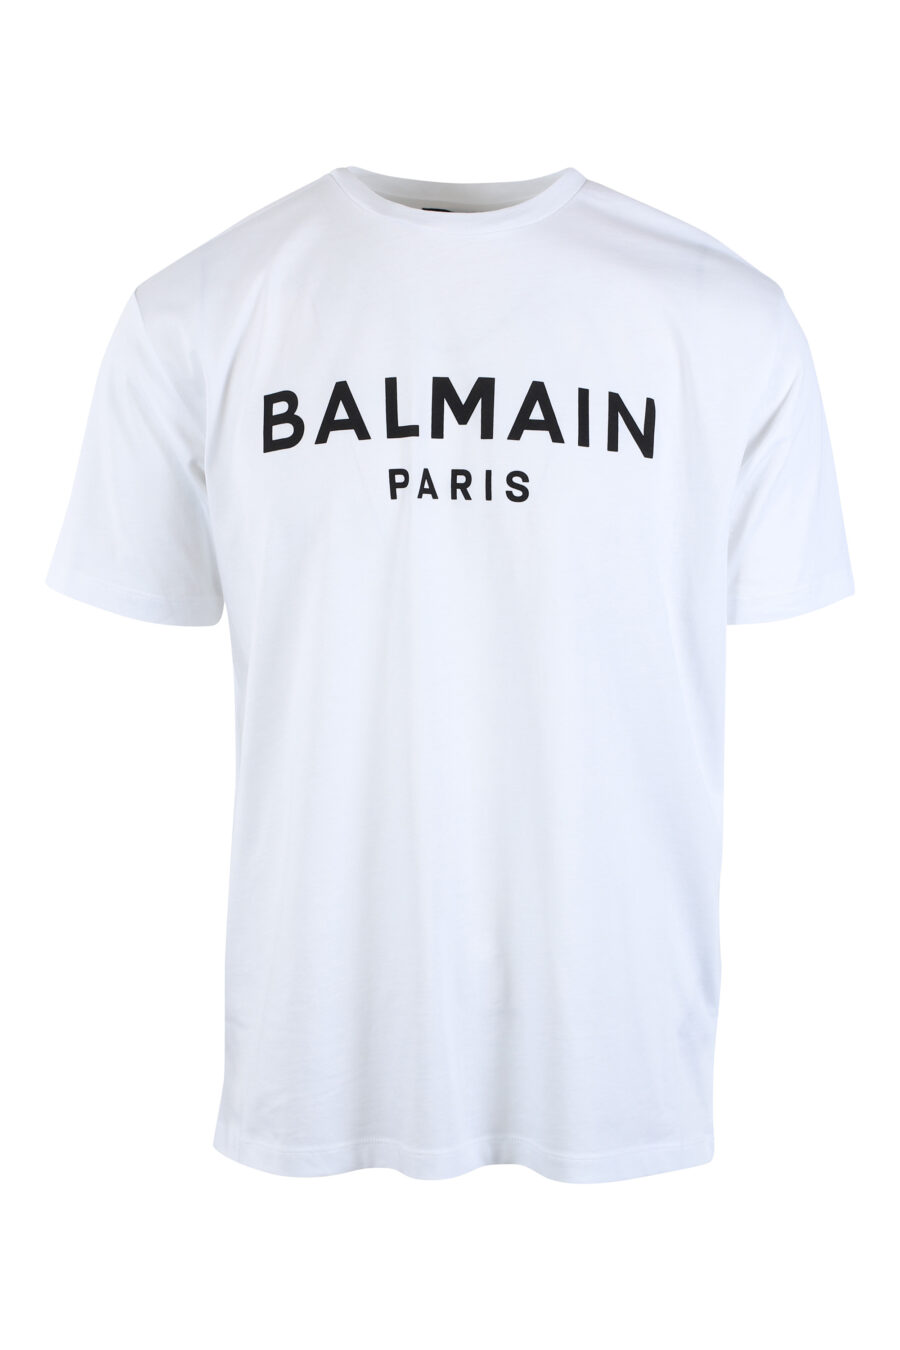 White T-shirt with black "paris" maxilogo - IMG 2607